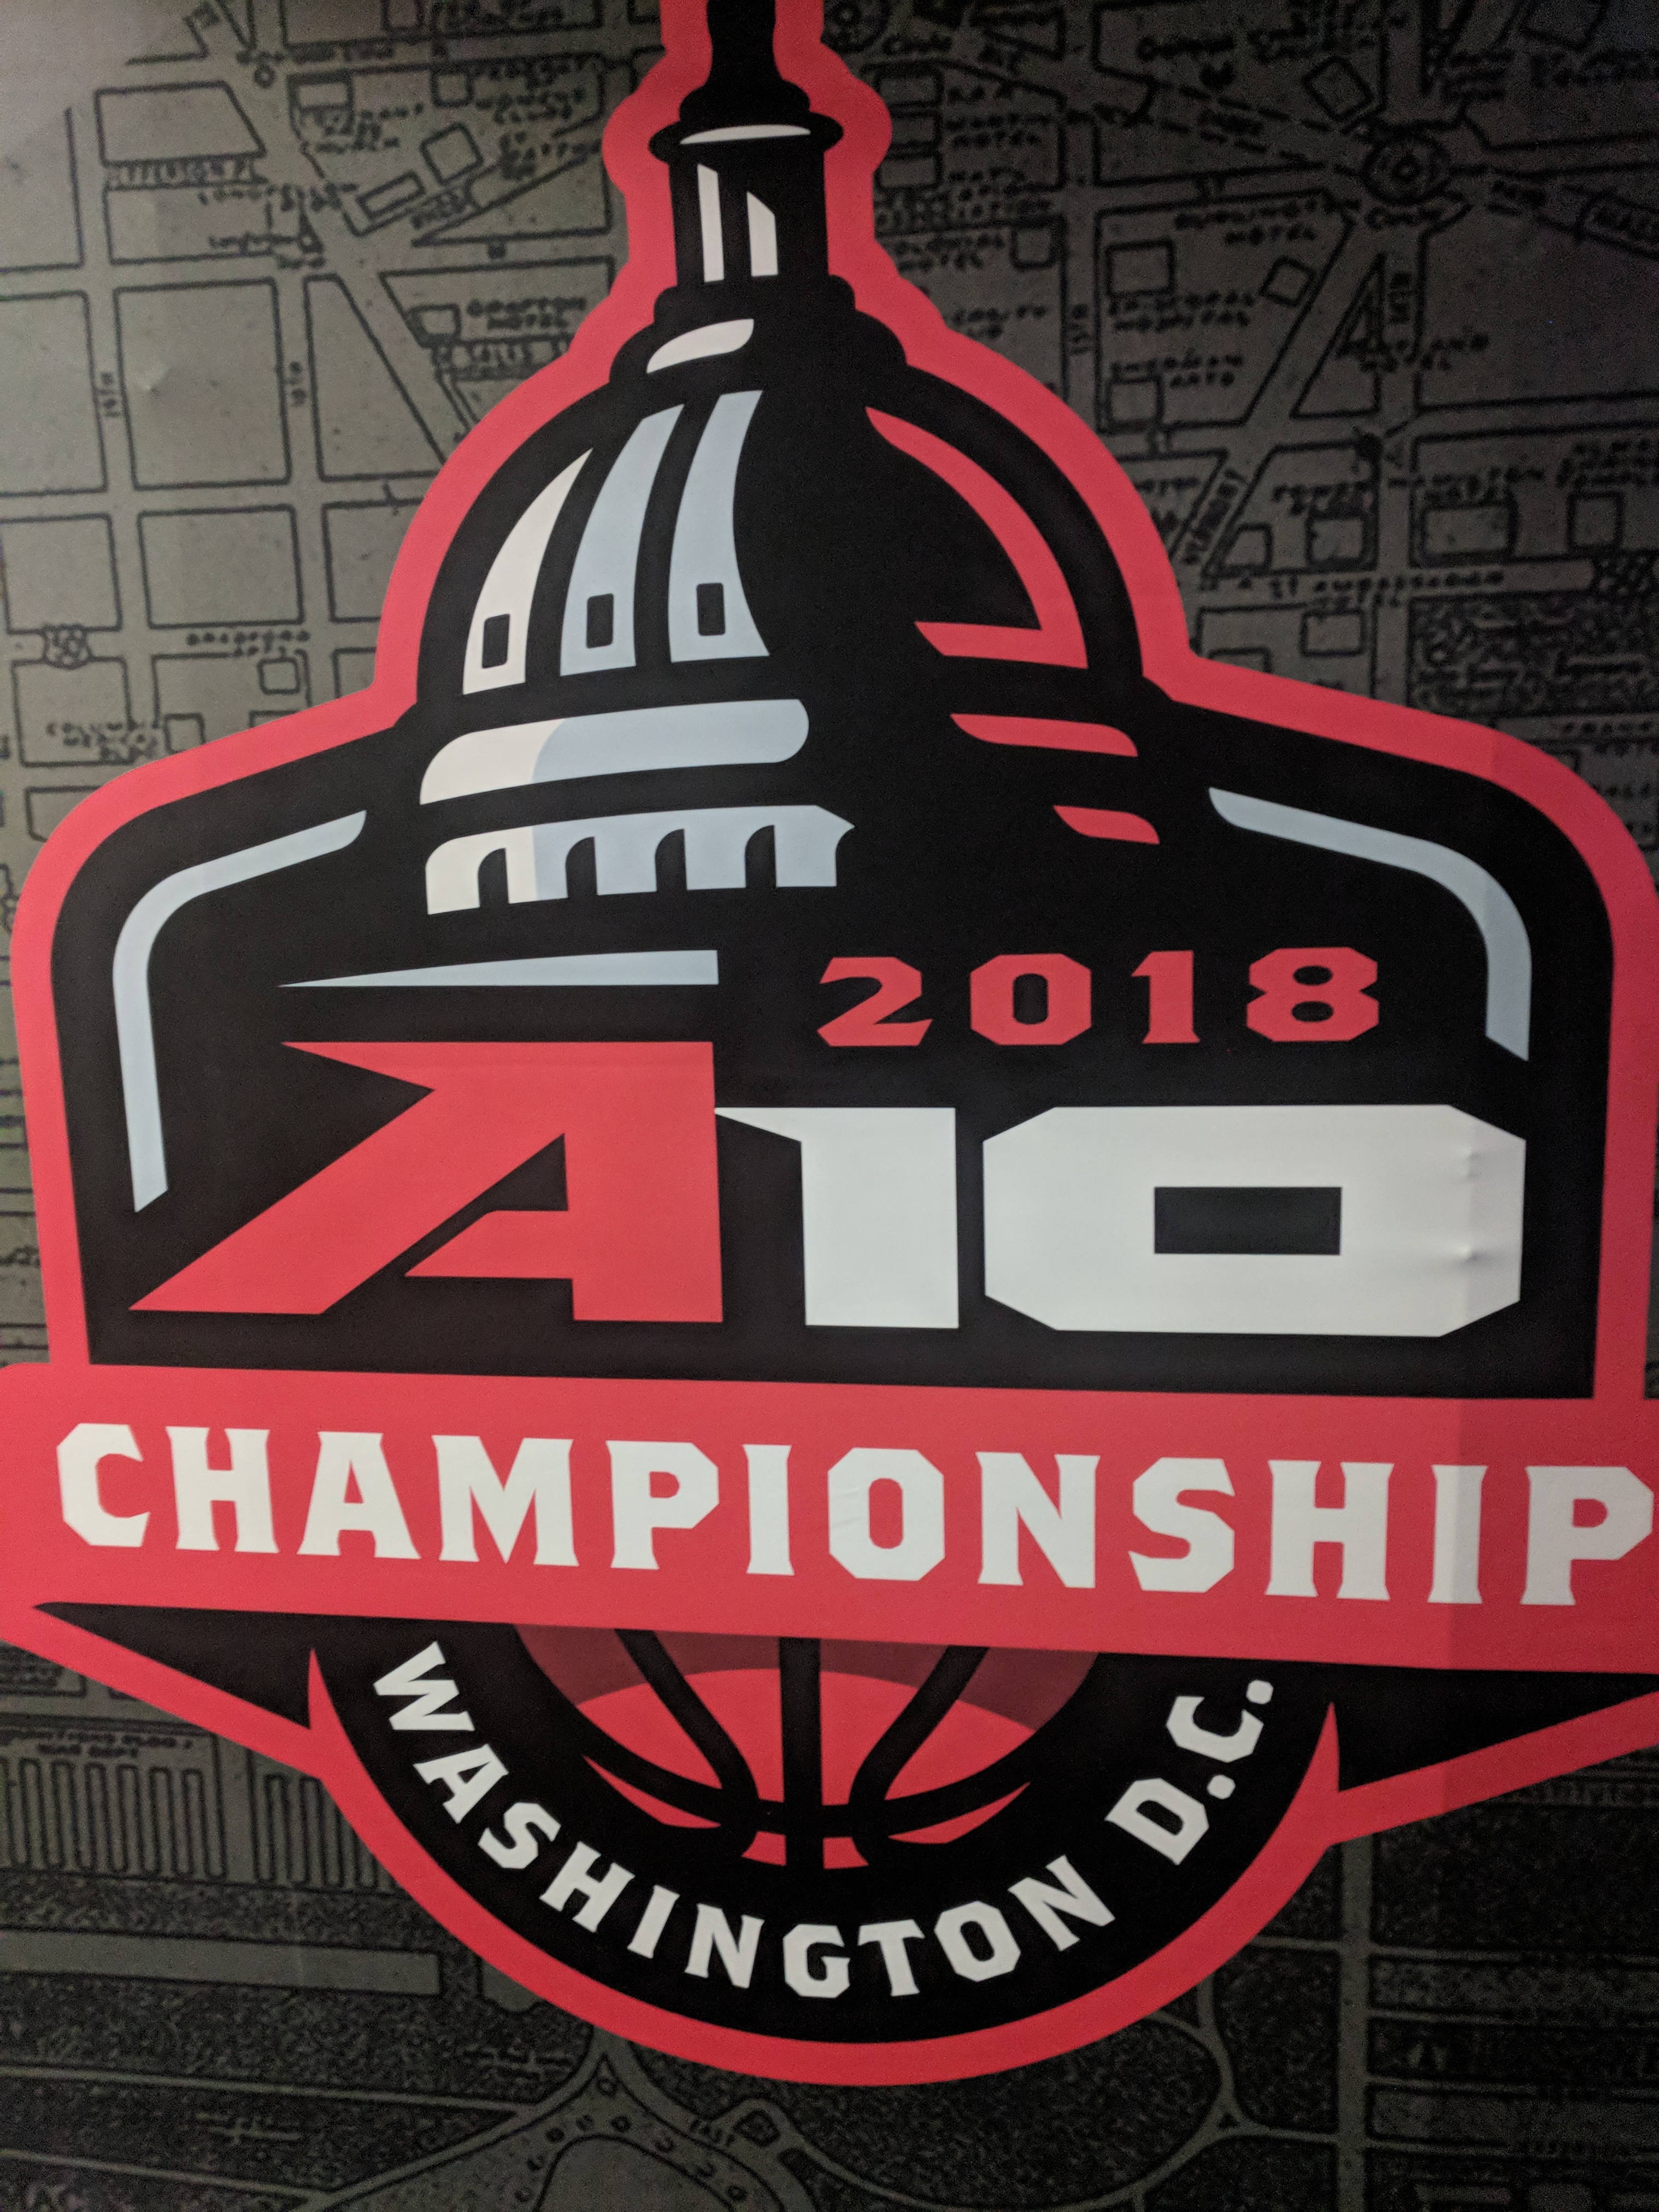 Atlantic 10 Tournament logo